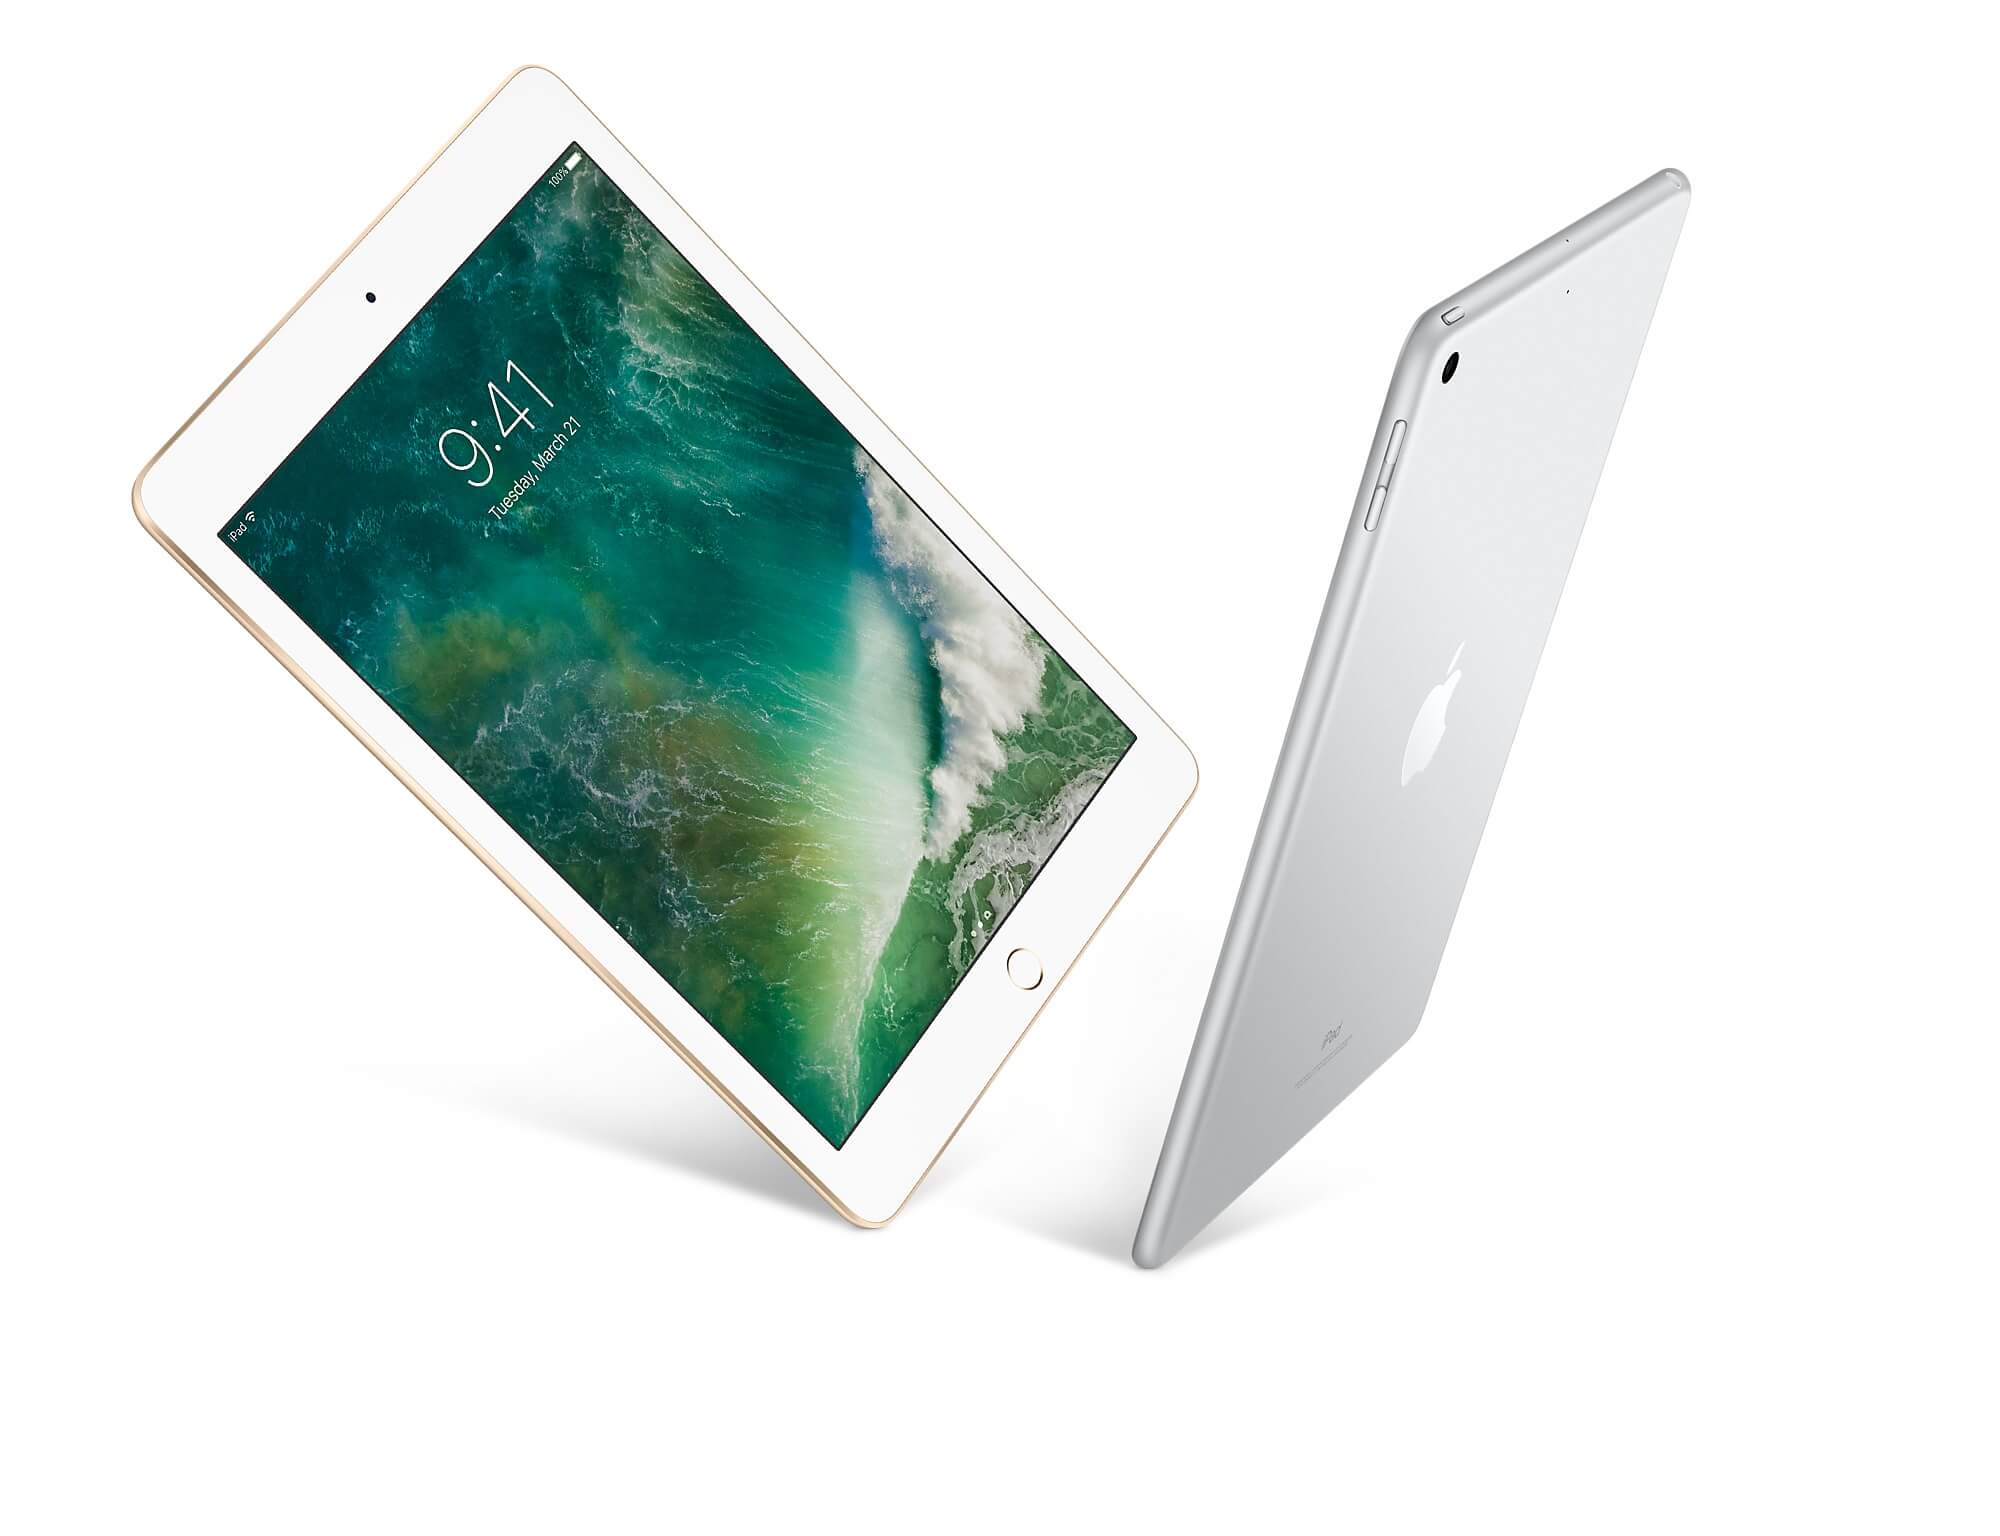 Apple iPad 32gb Wi-Fi Silver (MP2G2RK/A)